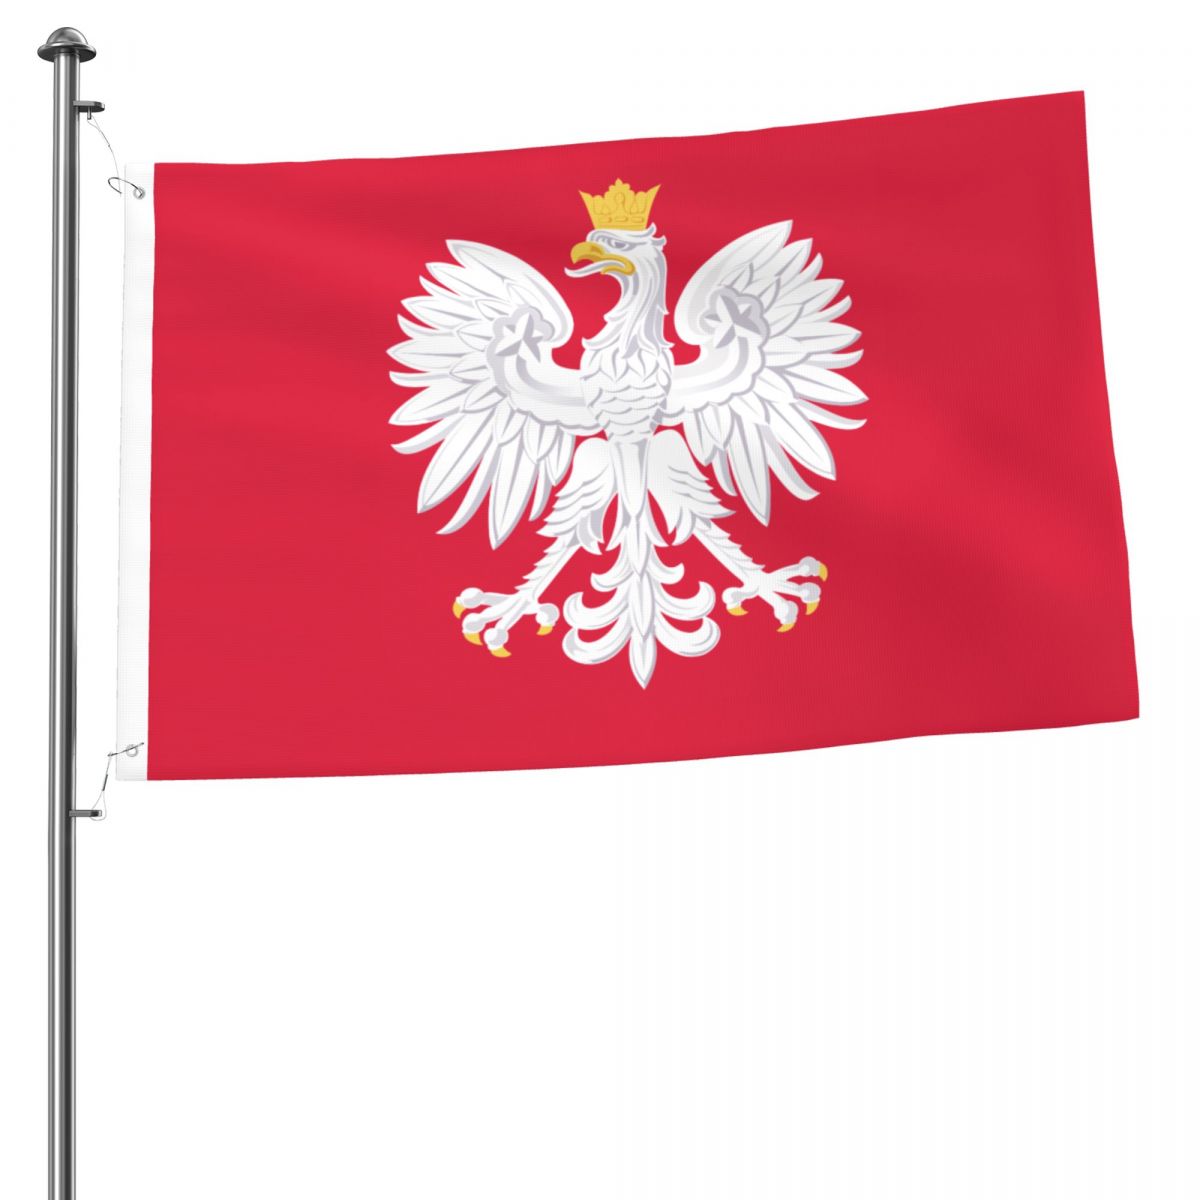 Poland National Football Team 2x3 FT UV Resistant Flag